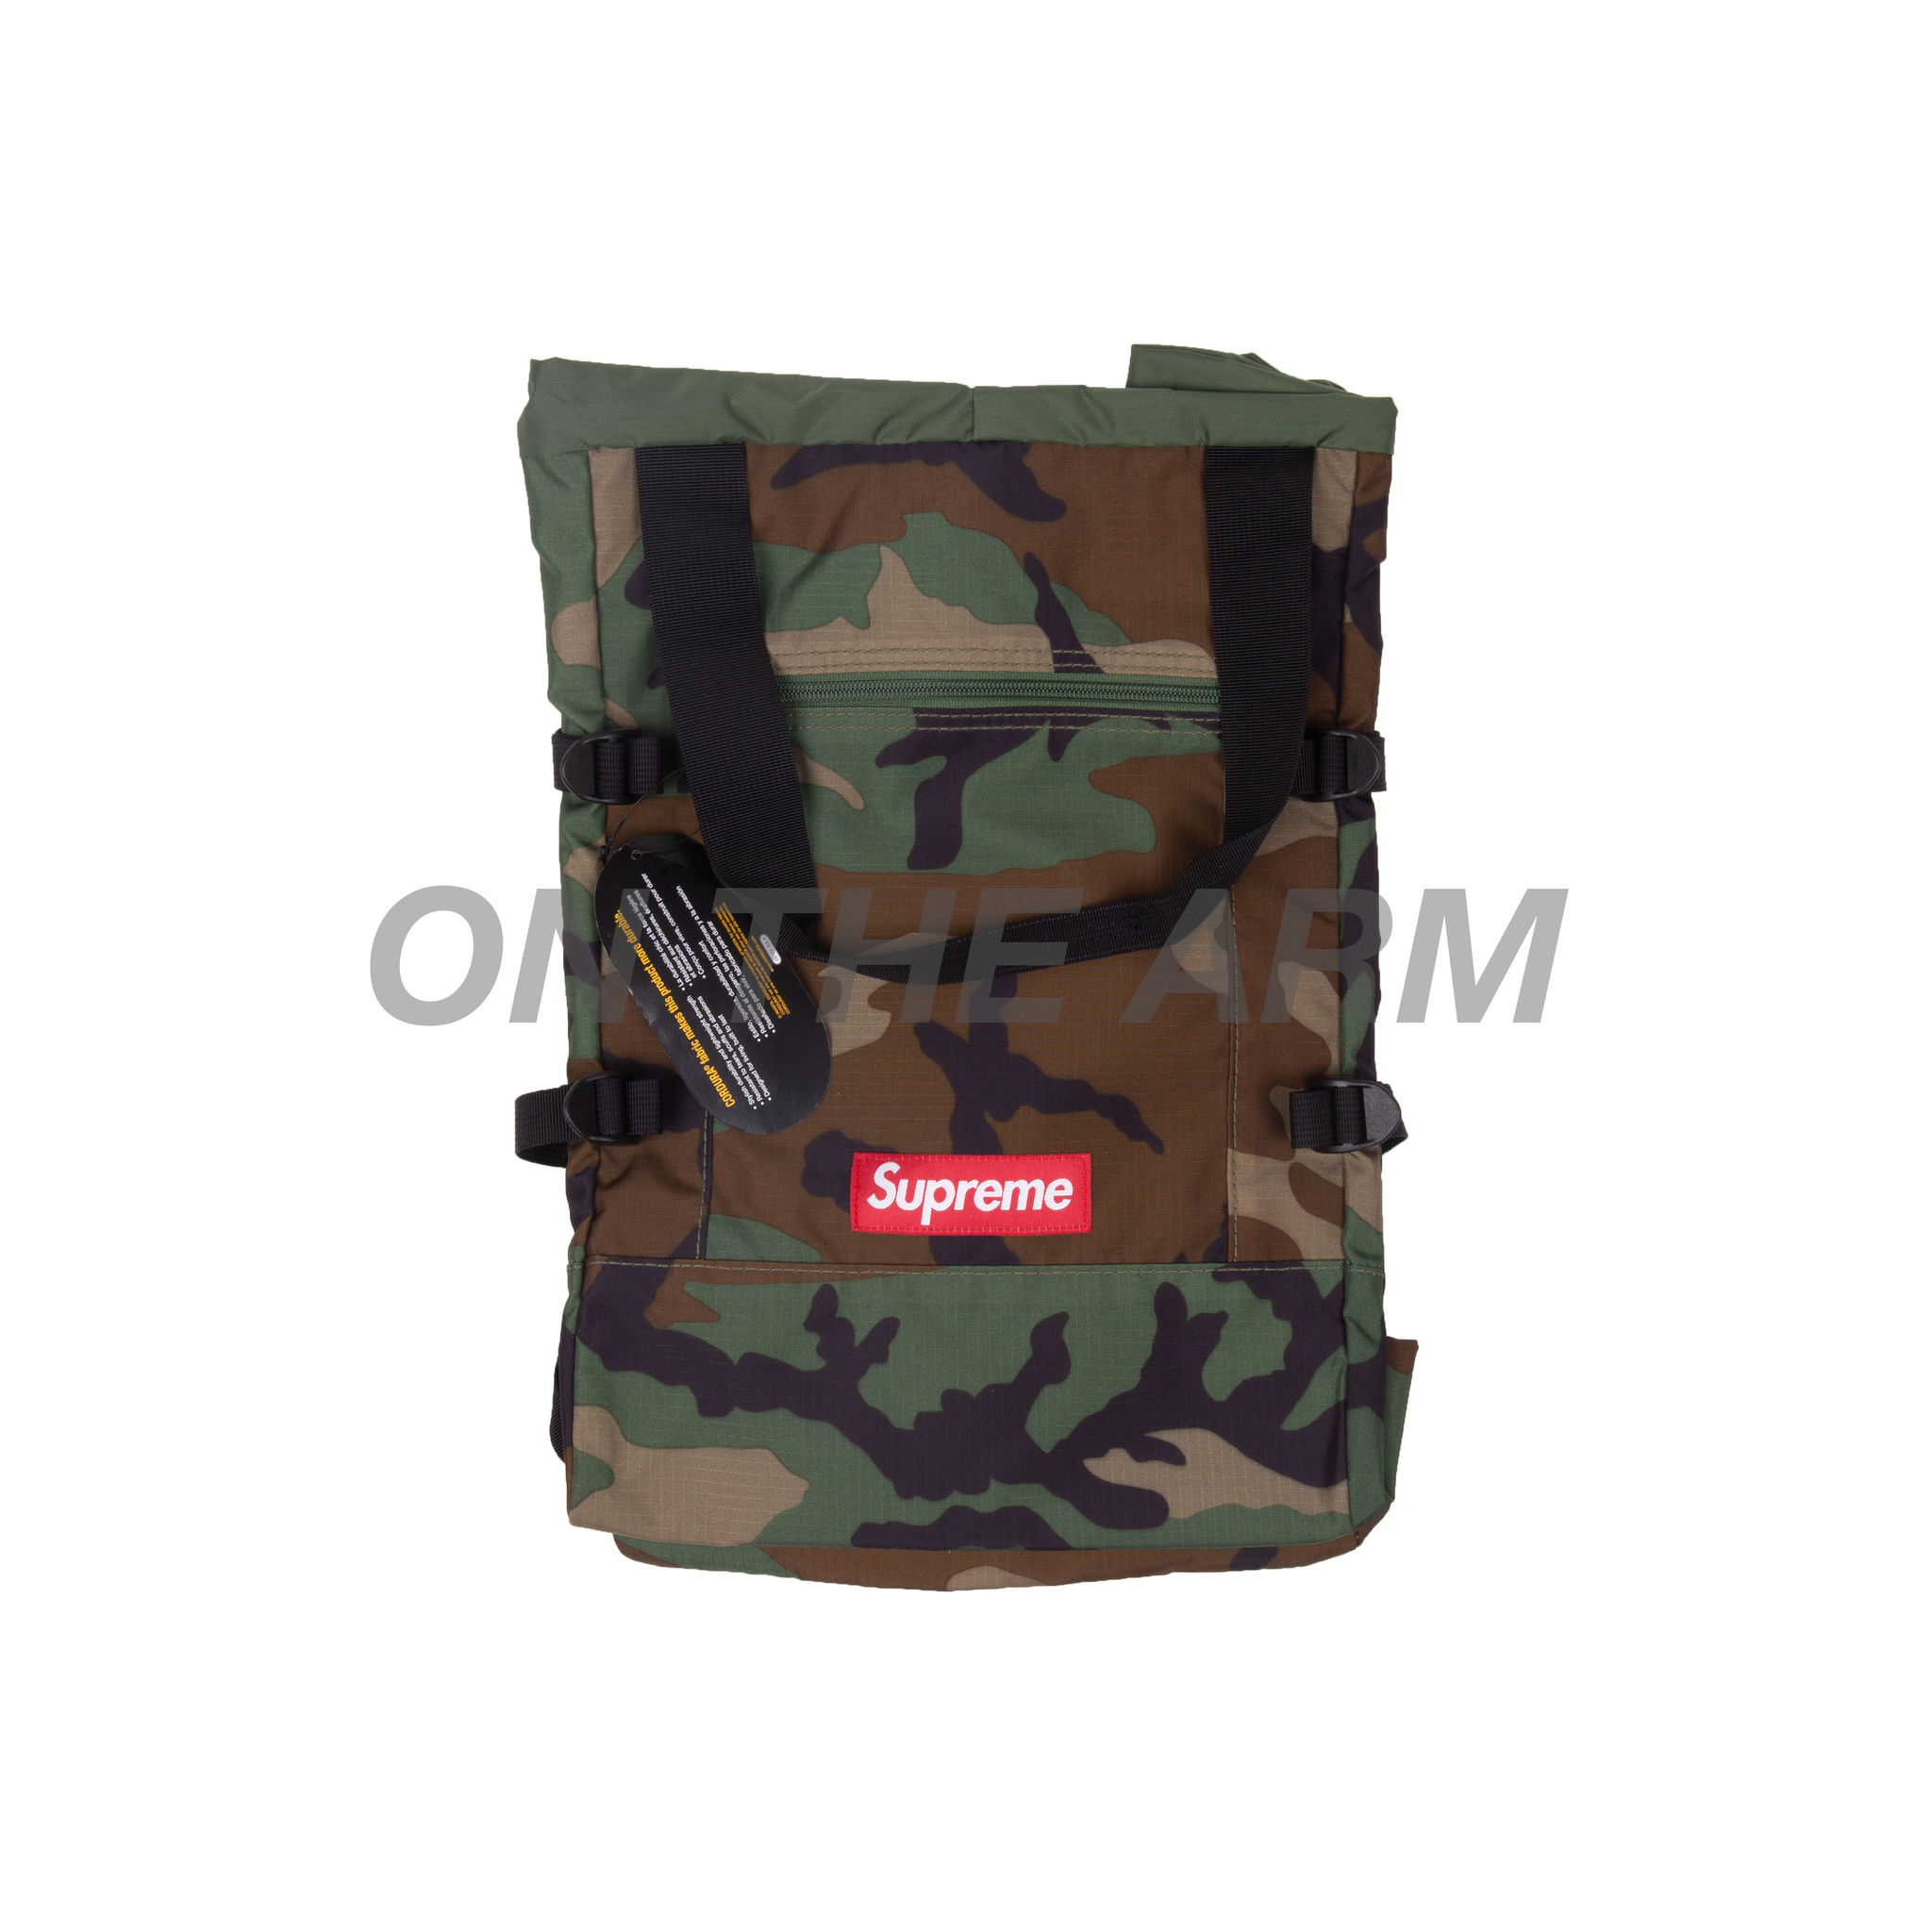 Supreme Camo Tote Backpack